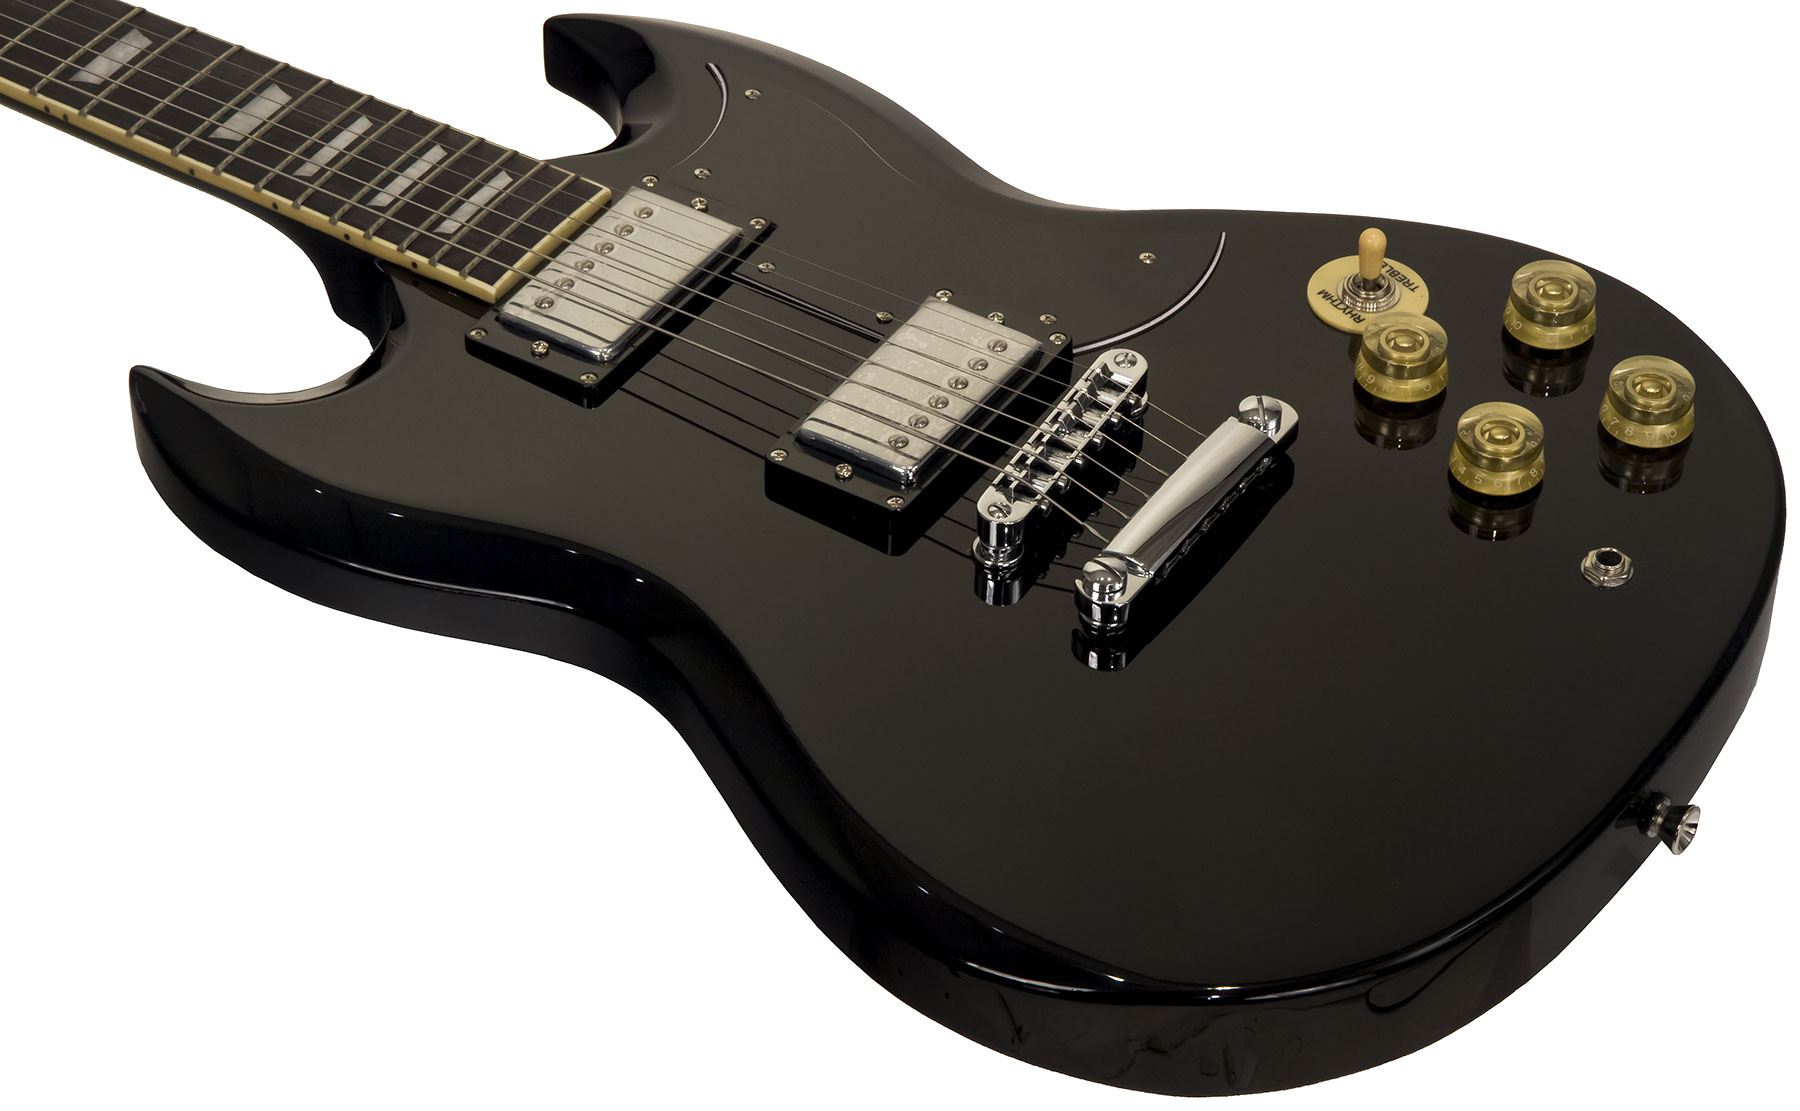 Eastone Sdc70 +marshall Mg10g Gold +cable +housse +courroie +mediators - Black - E-Gitarre Set - Variation 3